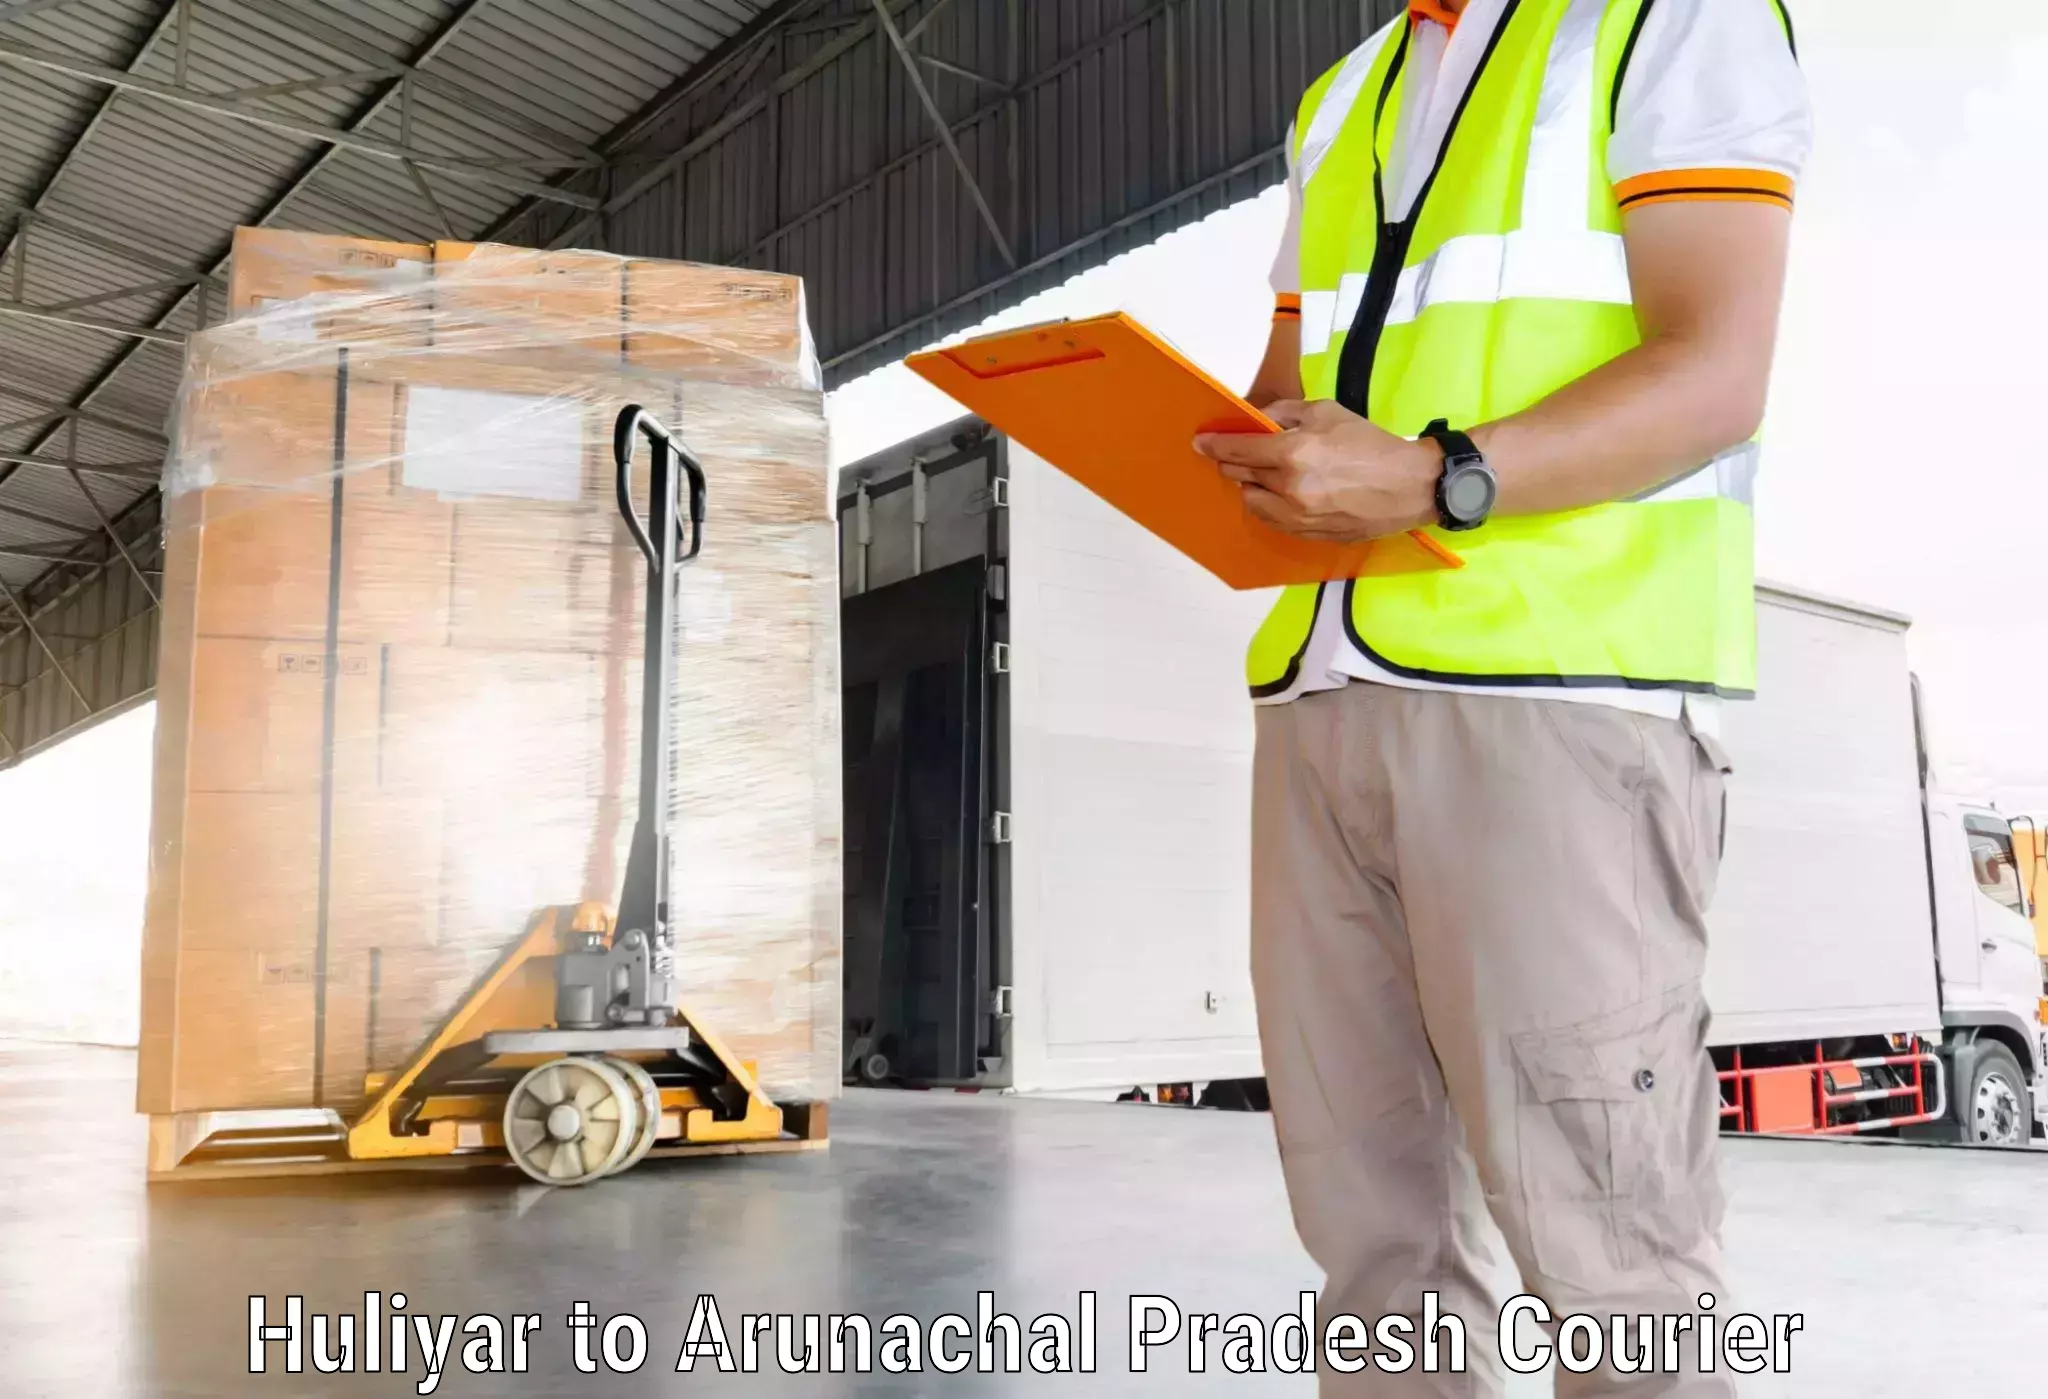 Courier service partnerships in Huliyar to Arunachal Pradesh